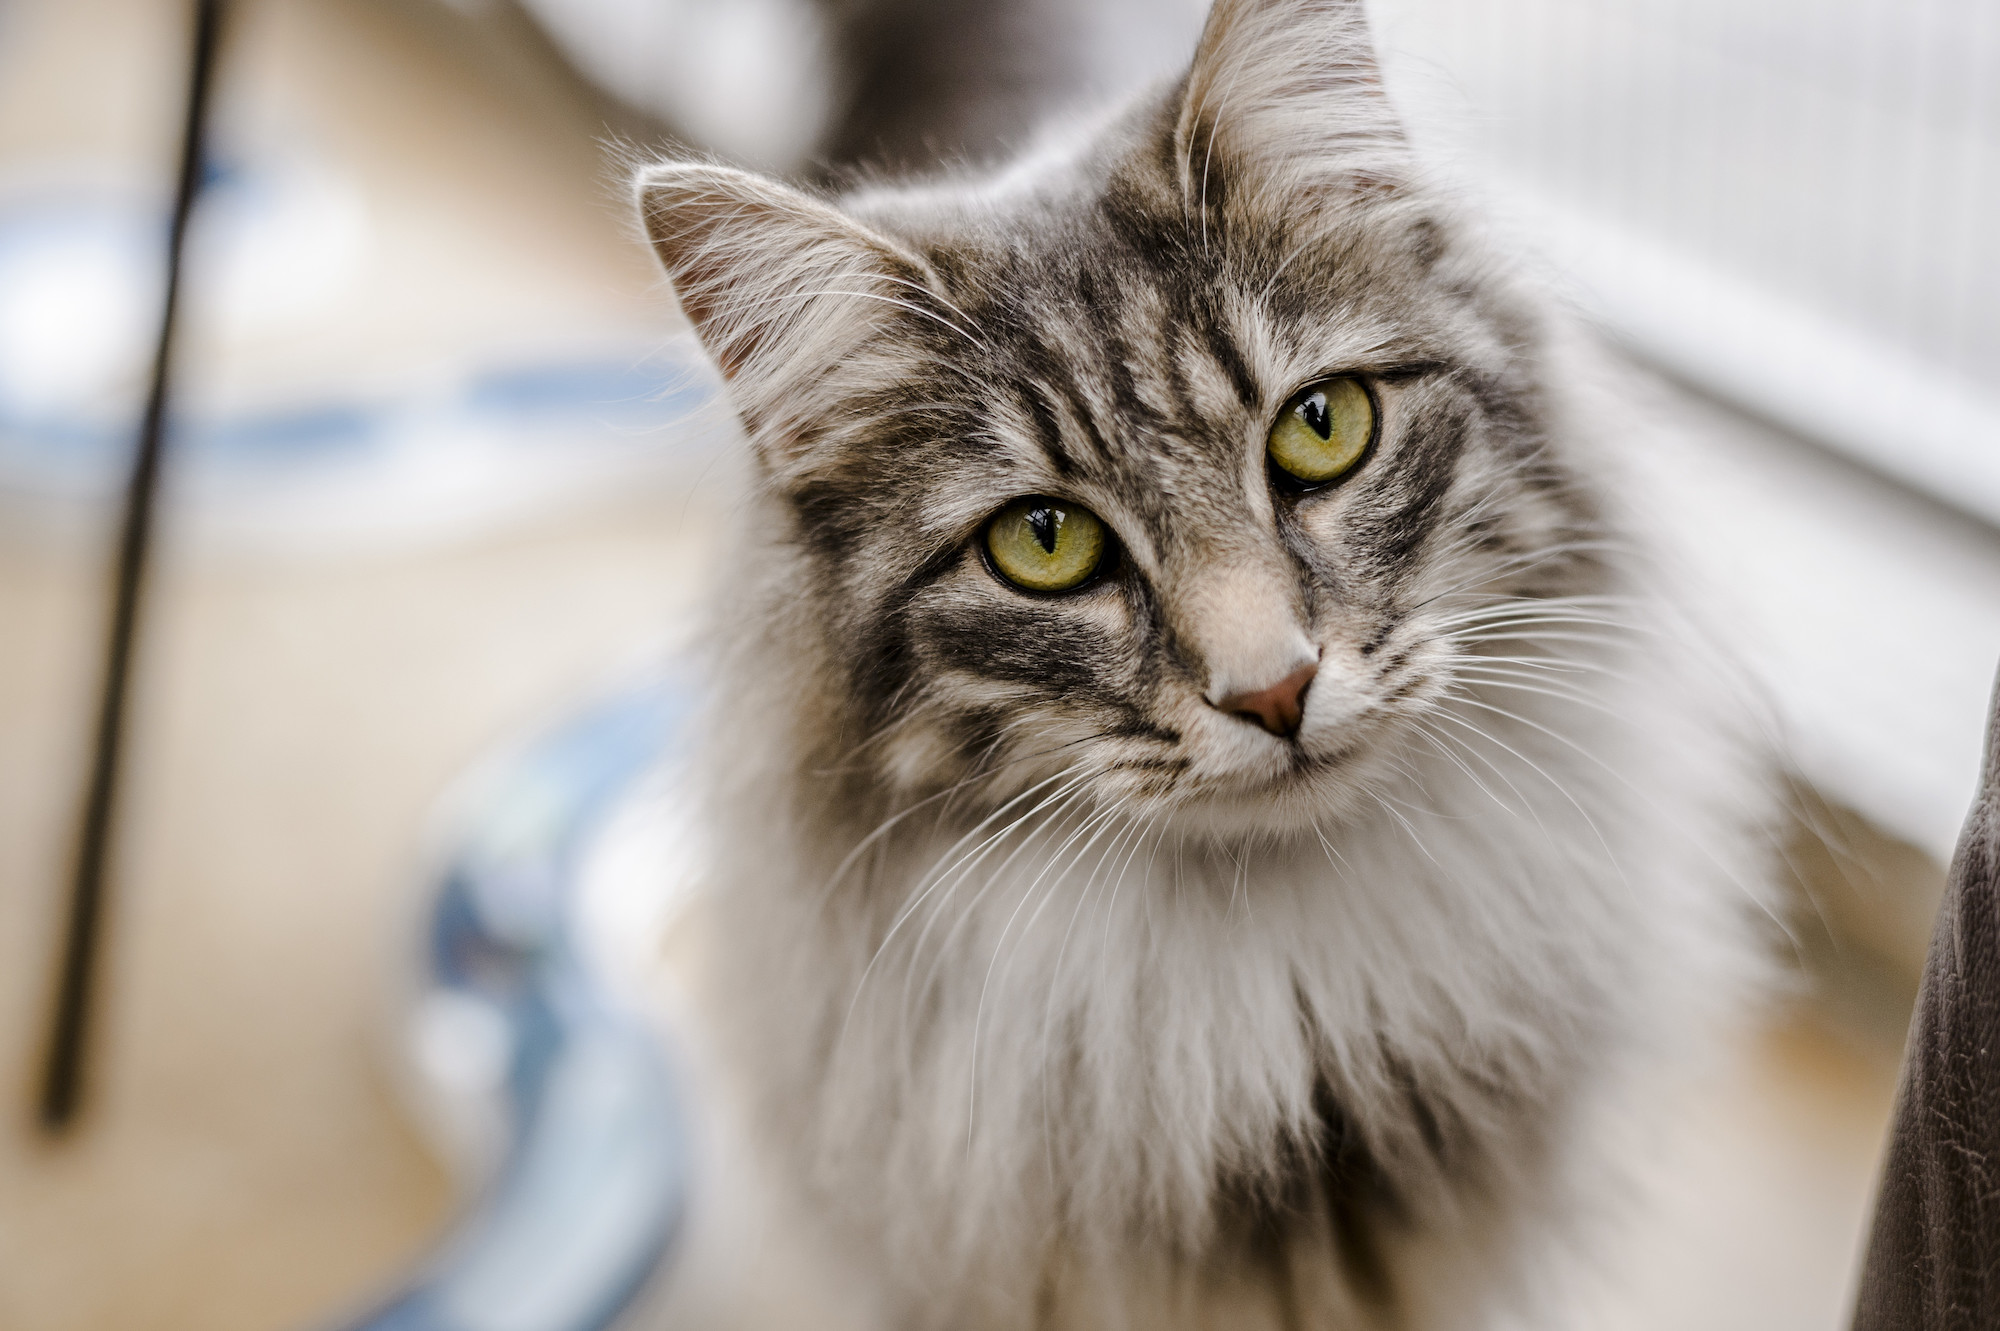 best flea treatment for cats uk 2019